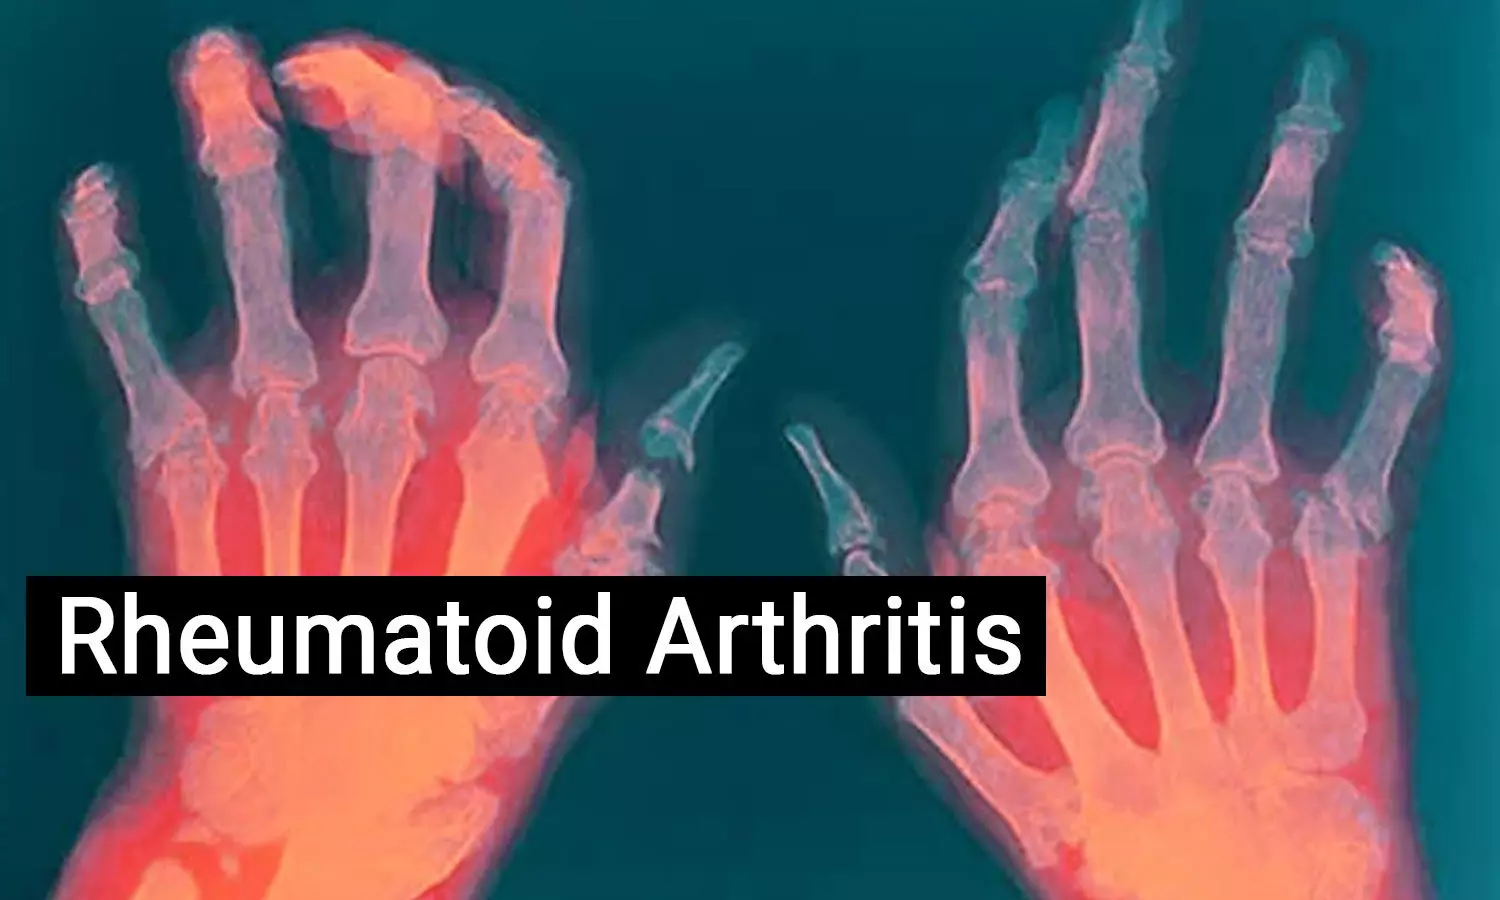 ACR updates guidelines on  Management of Rheumatoid Arthritis